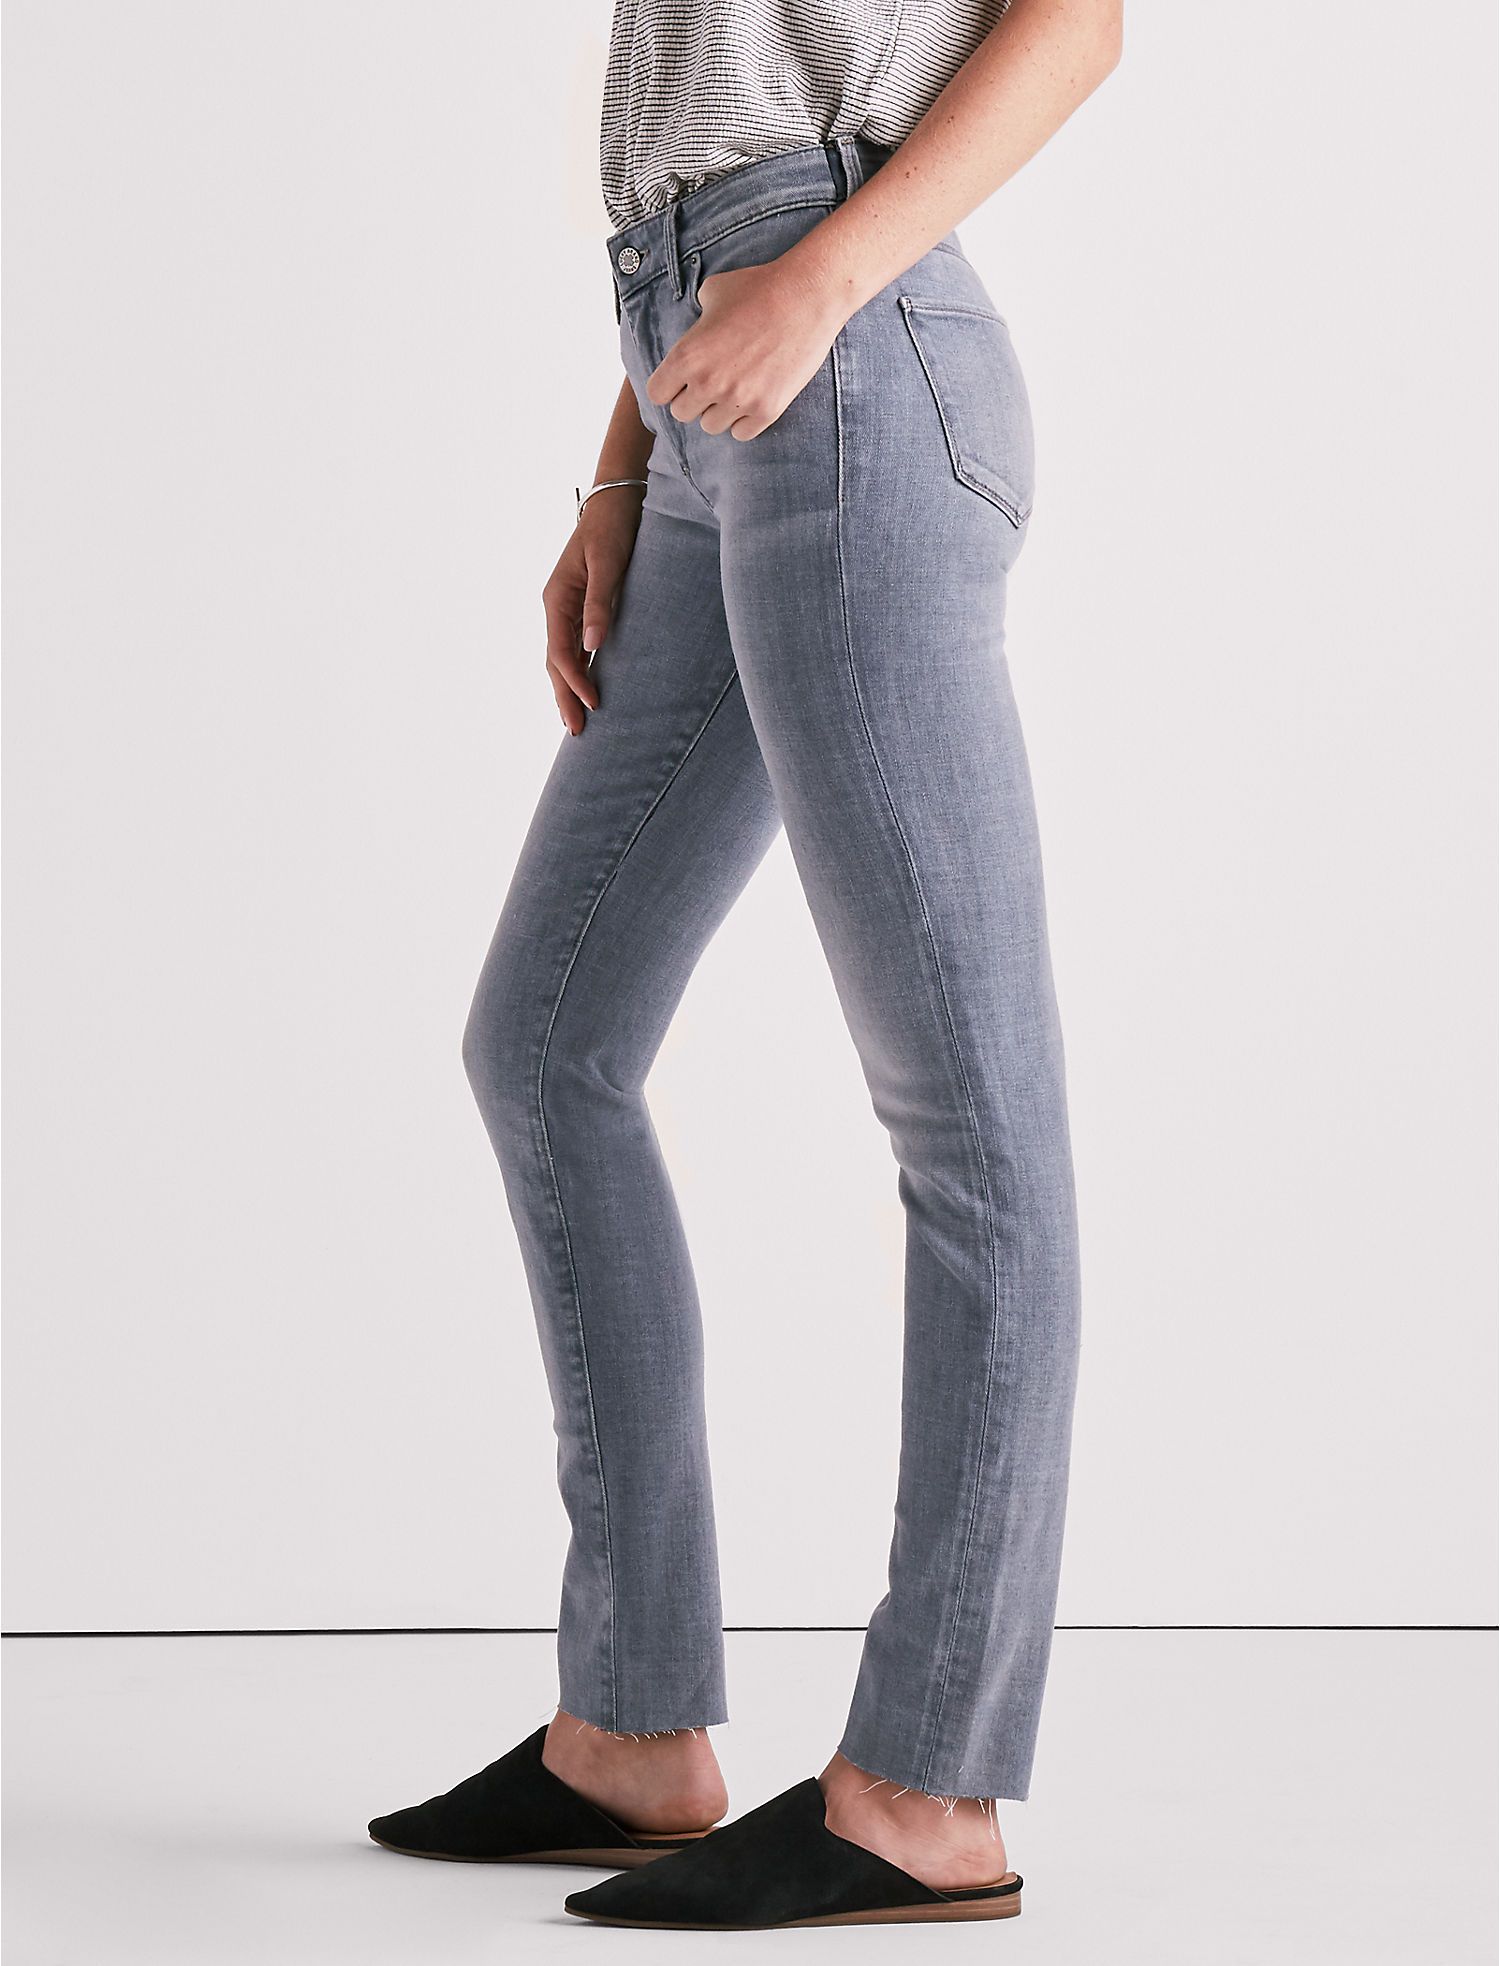 Hayden High Rise Skinny Jean In June Gloom | Lucky Brand | Lucky Brand